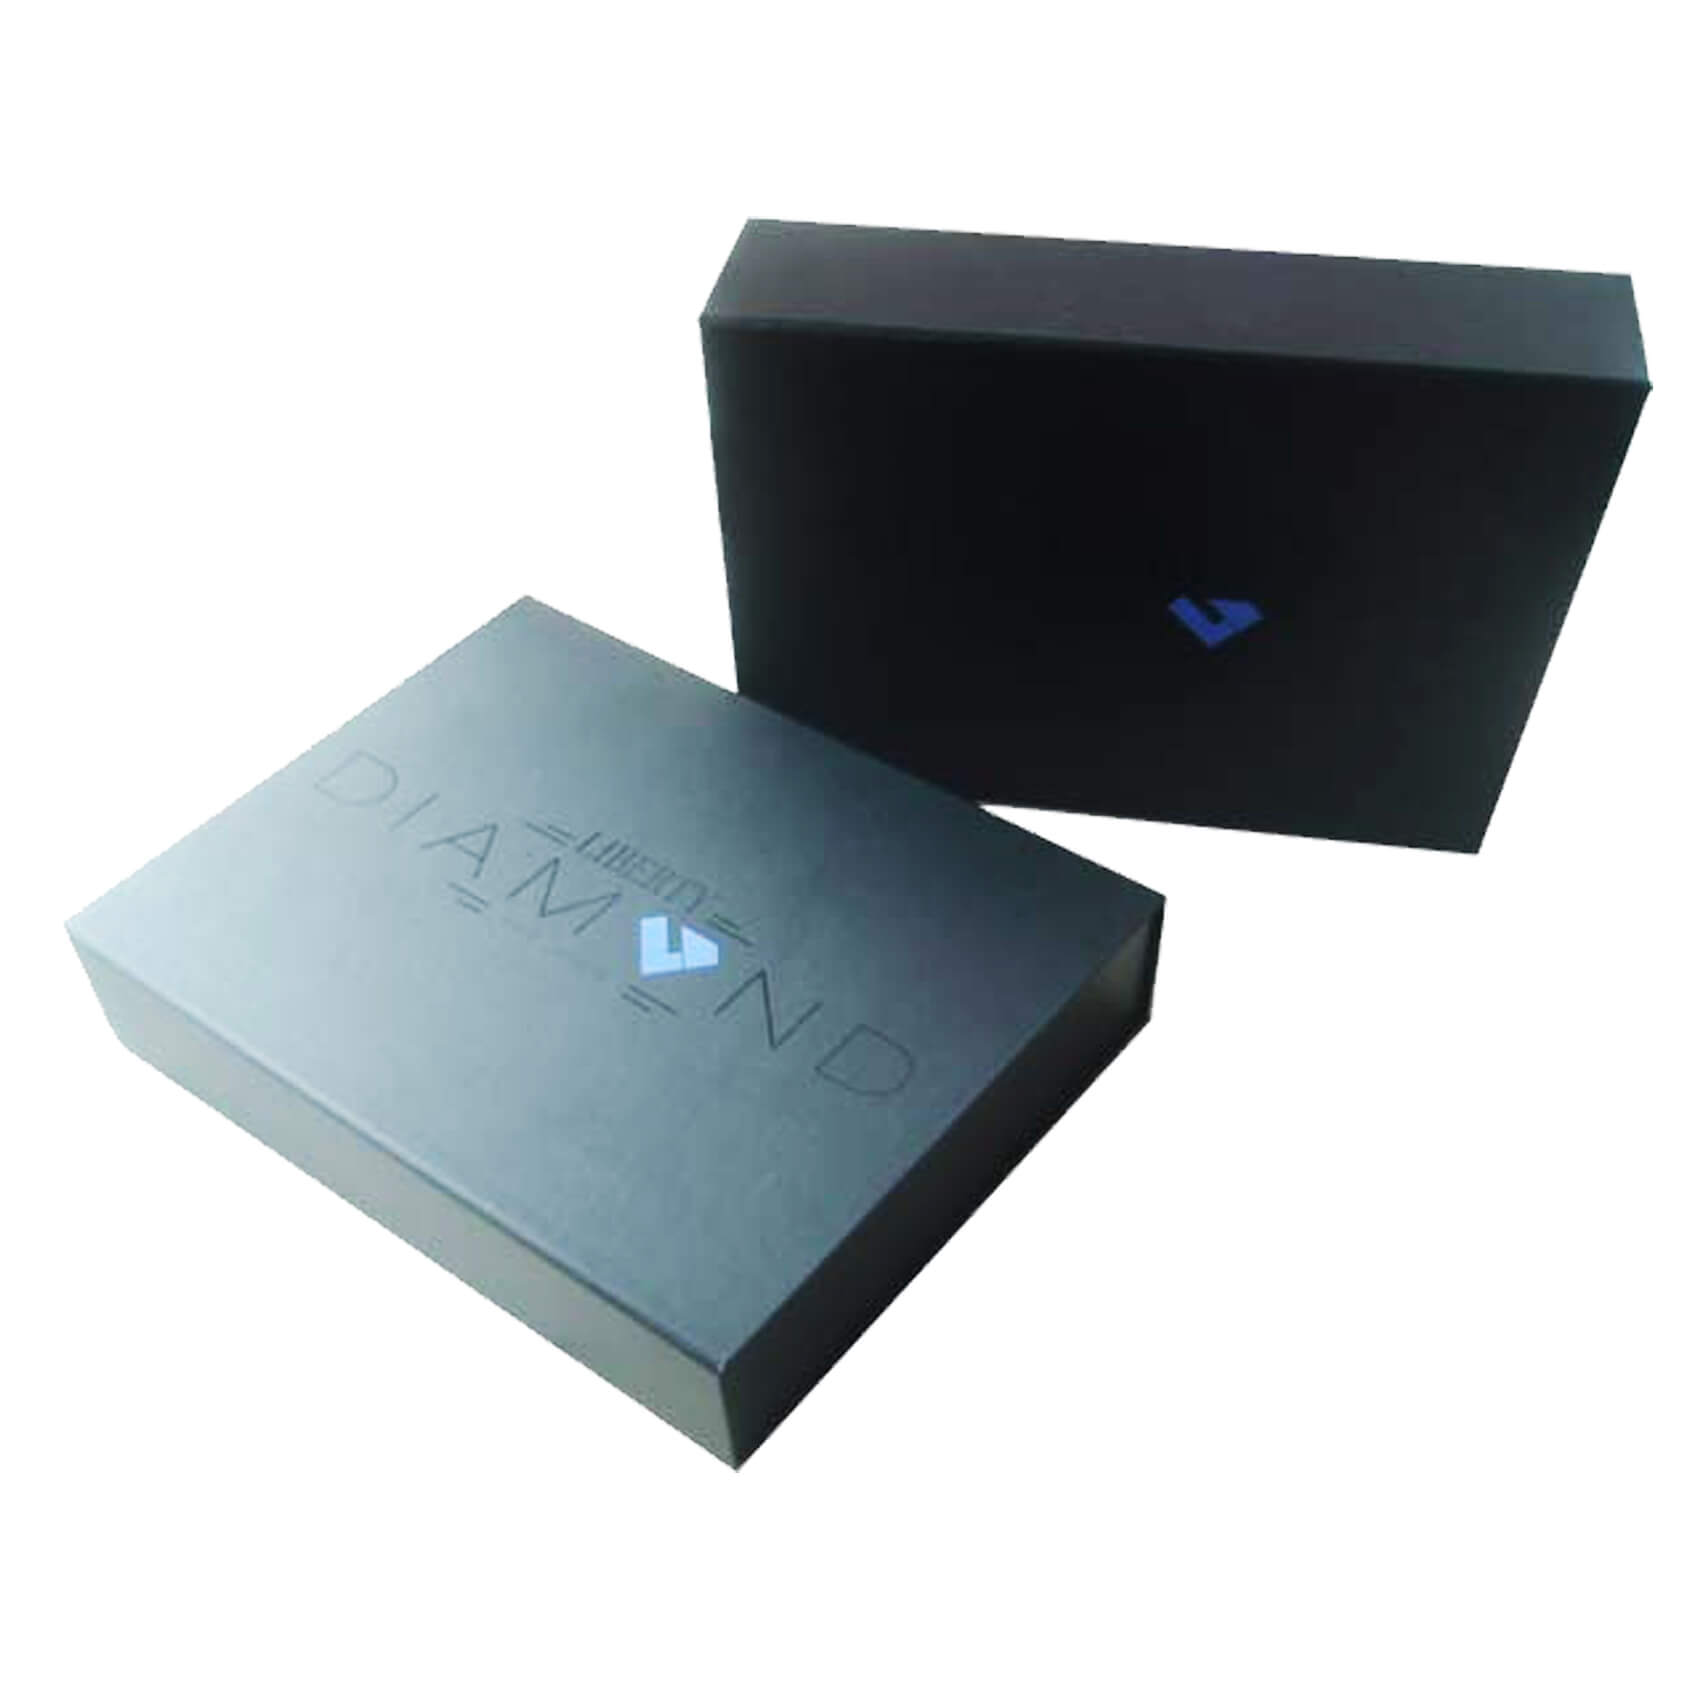 box with uv logo